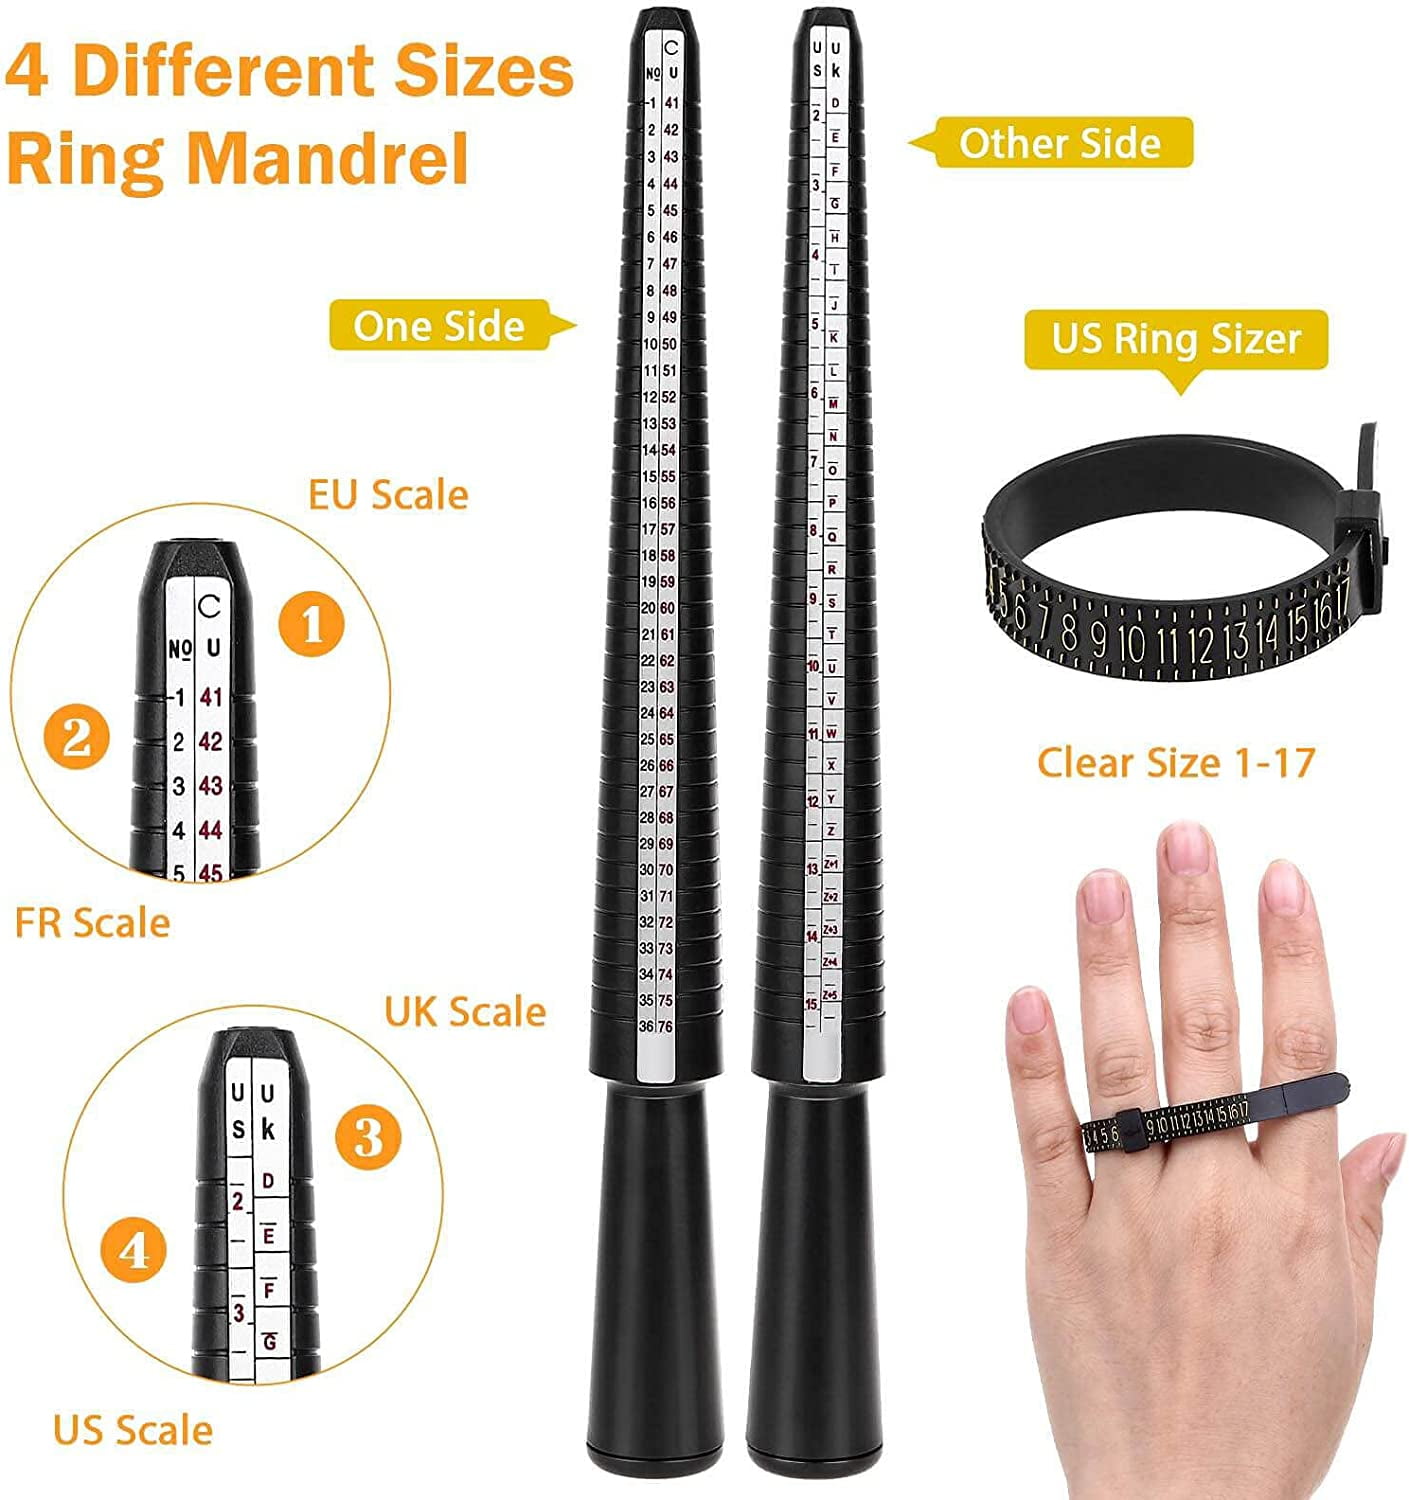 Gisneze Ring Sizer Measuring Tool Finger Ring Mandrel, EEEkit Ring Gauge Black Finger Sizer Stick Finger Sizing Measurement Jewelry Making Tools Set of 27 Pcs